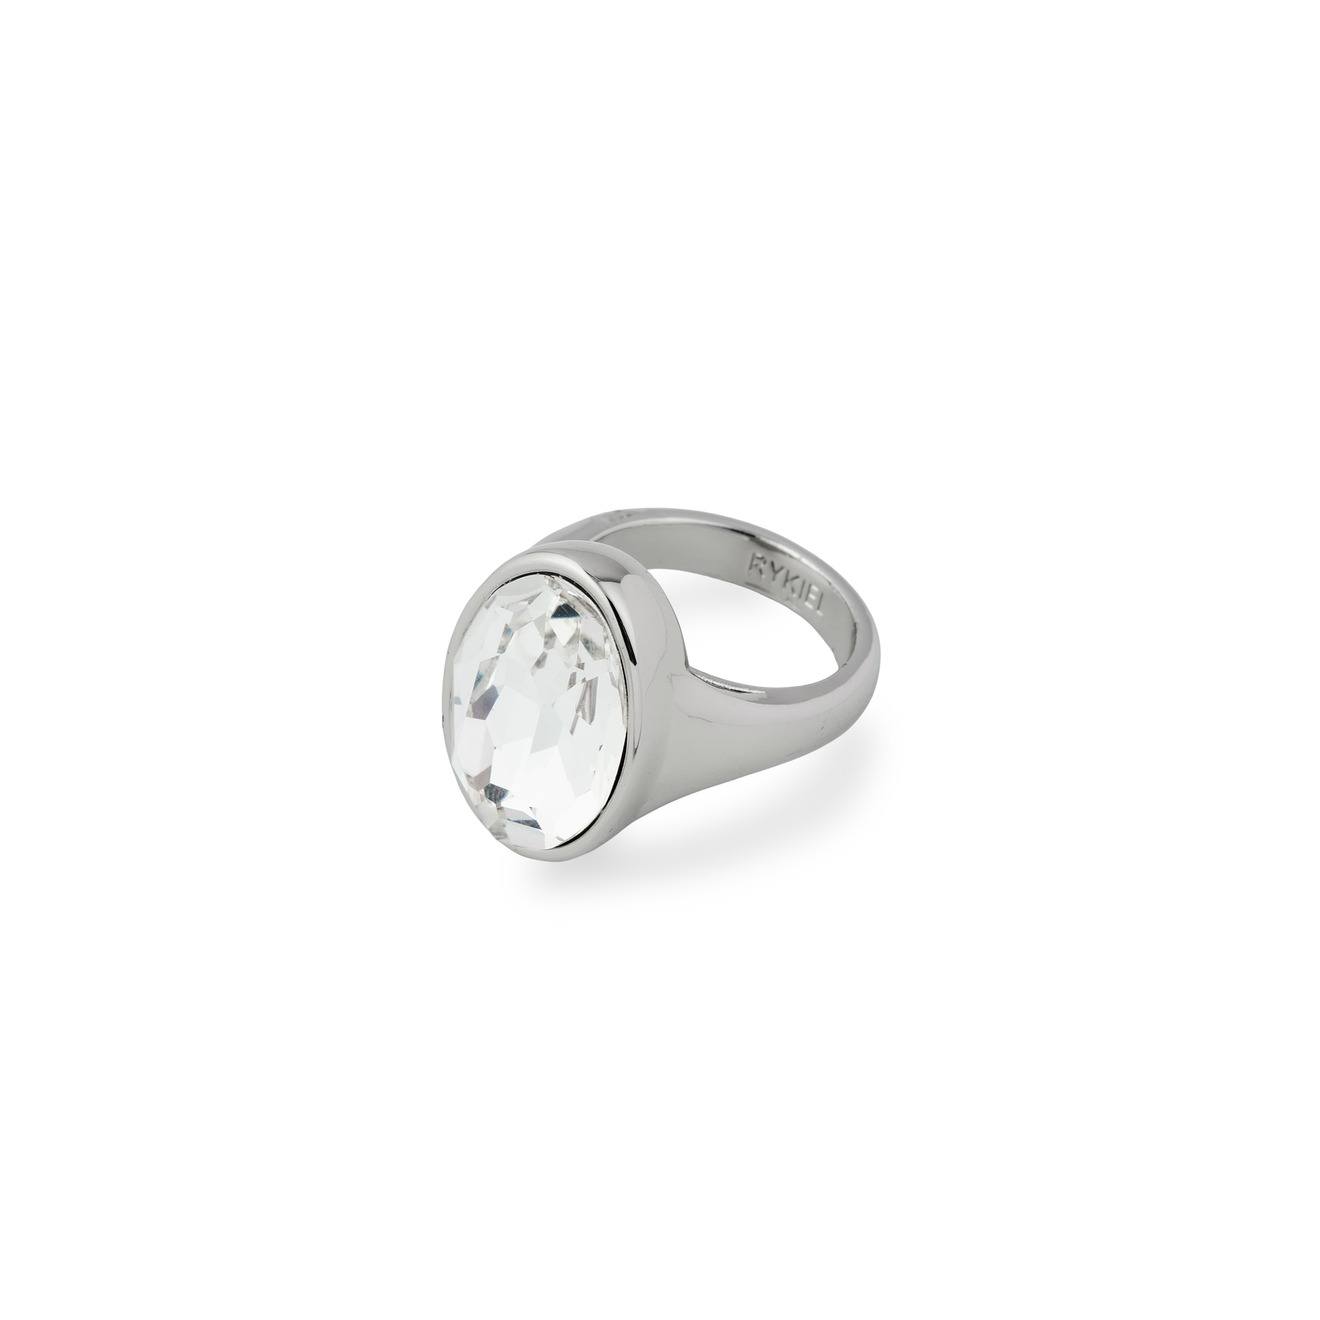 SONIA RYKIEL Объемное серебристое кольцо с кристаллом цена и фото